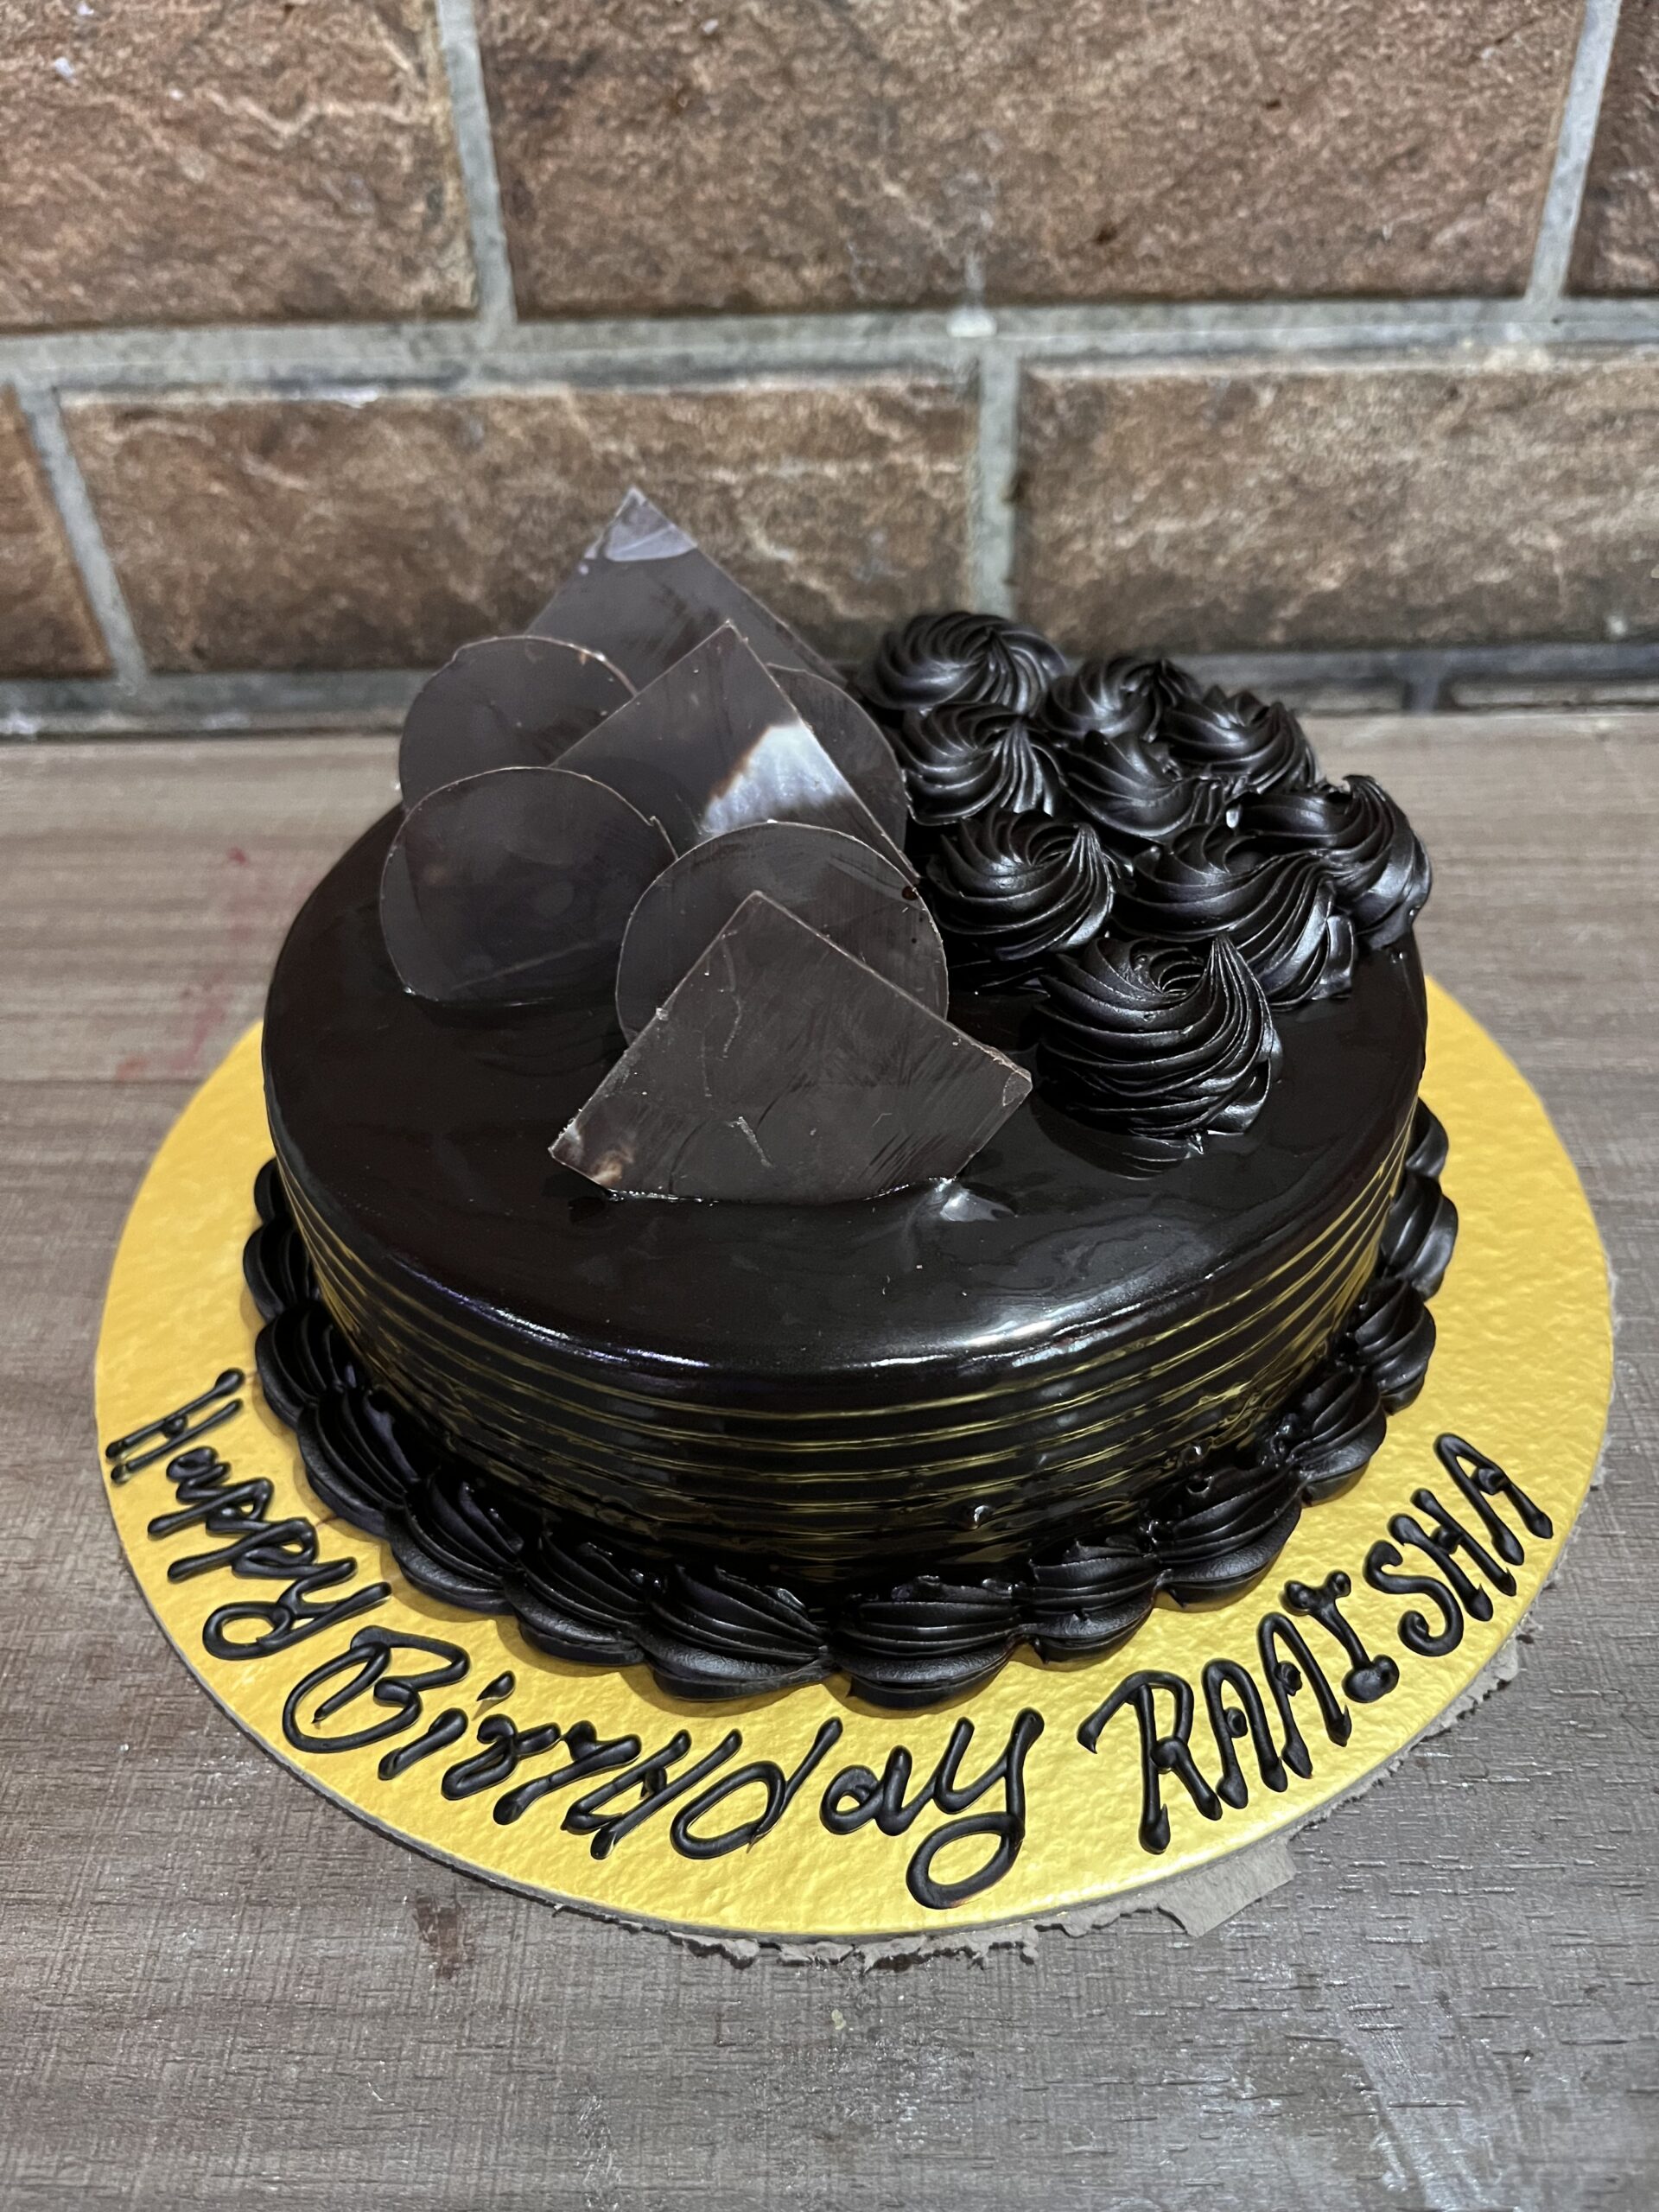 Chocolate Malt Cake - Glorious Treats